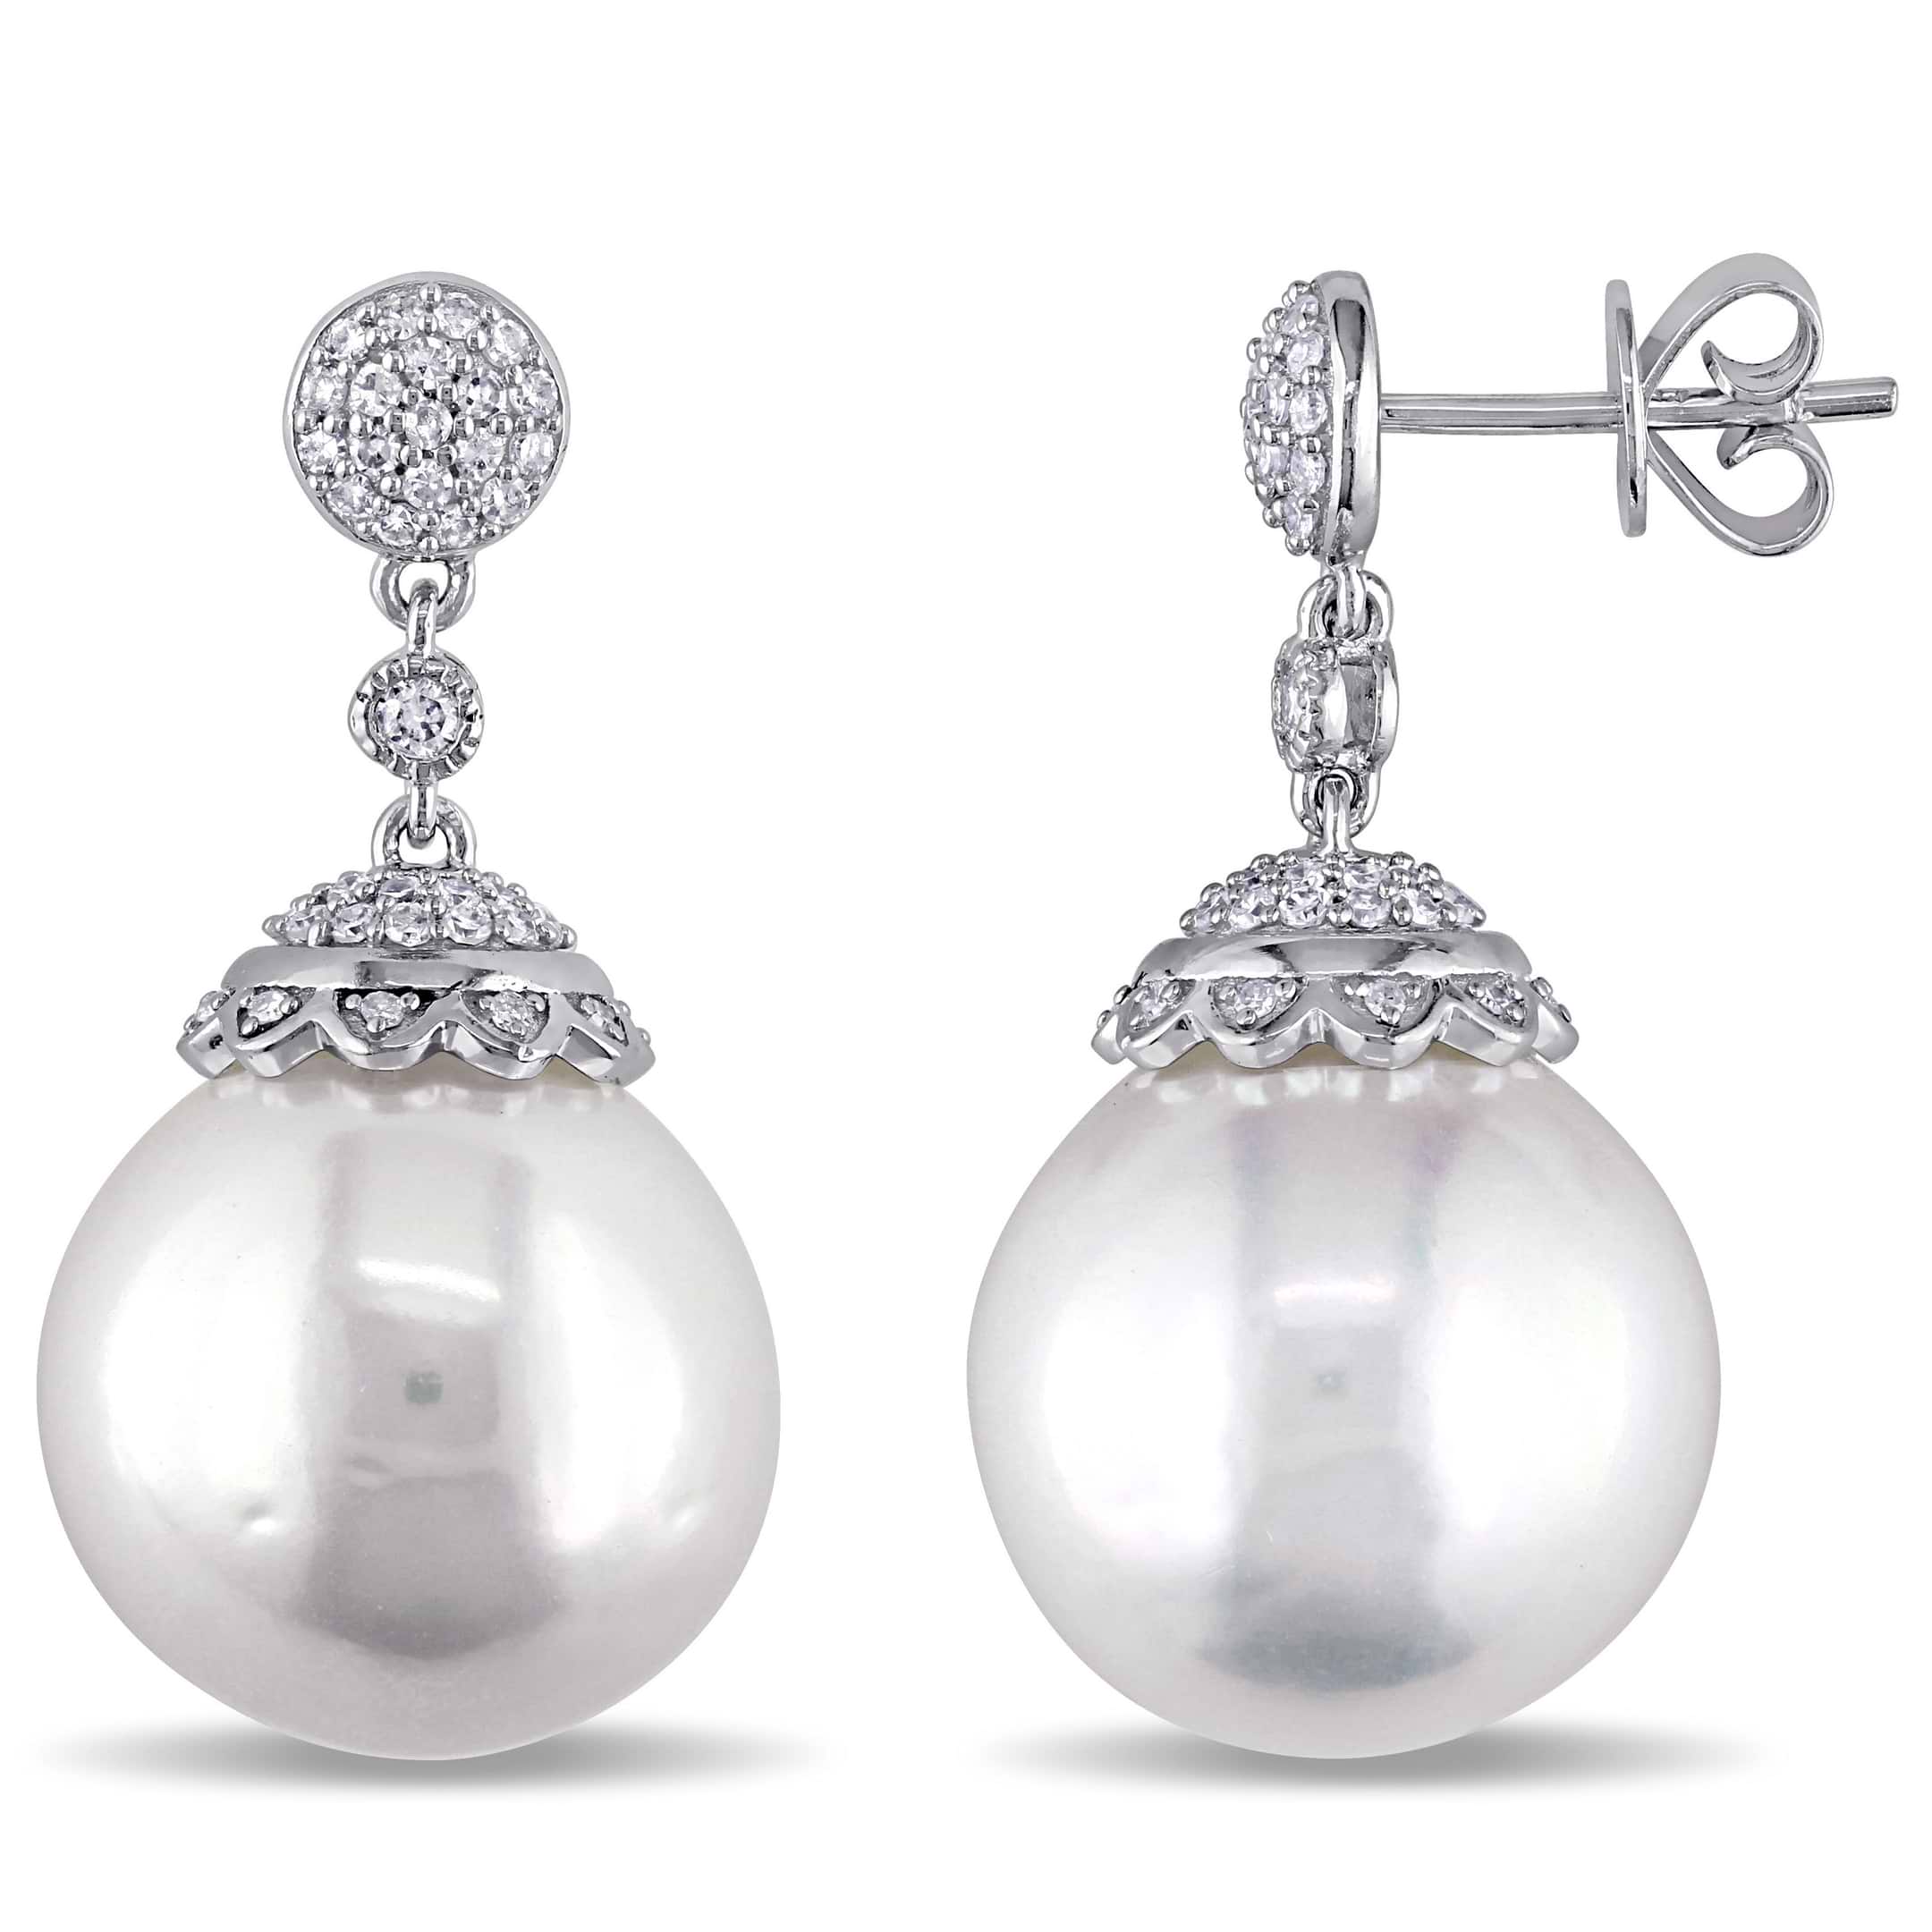 Round Pearl & Diamond Dangling Earrings 14k White Gold (0.50ct)